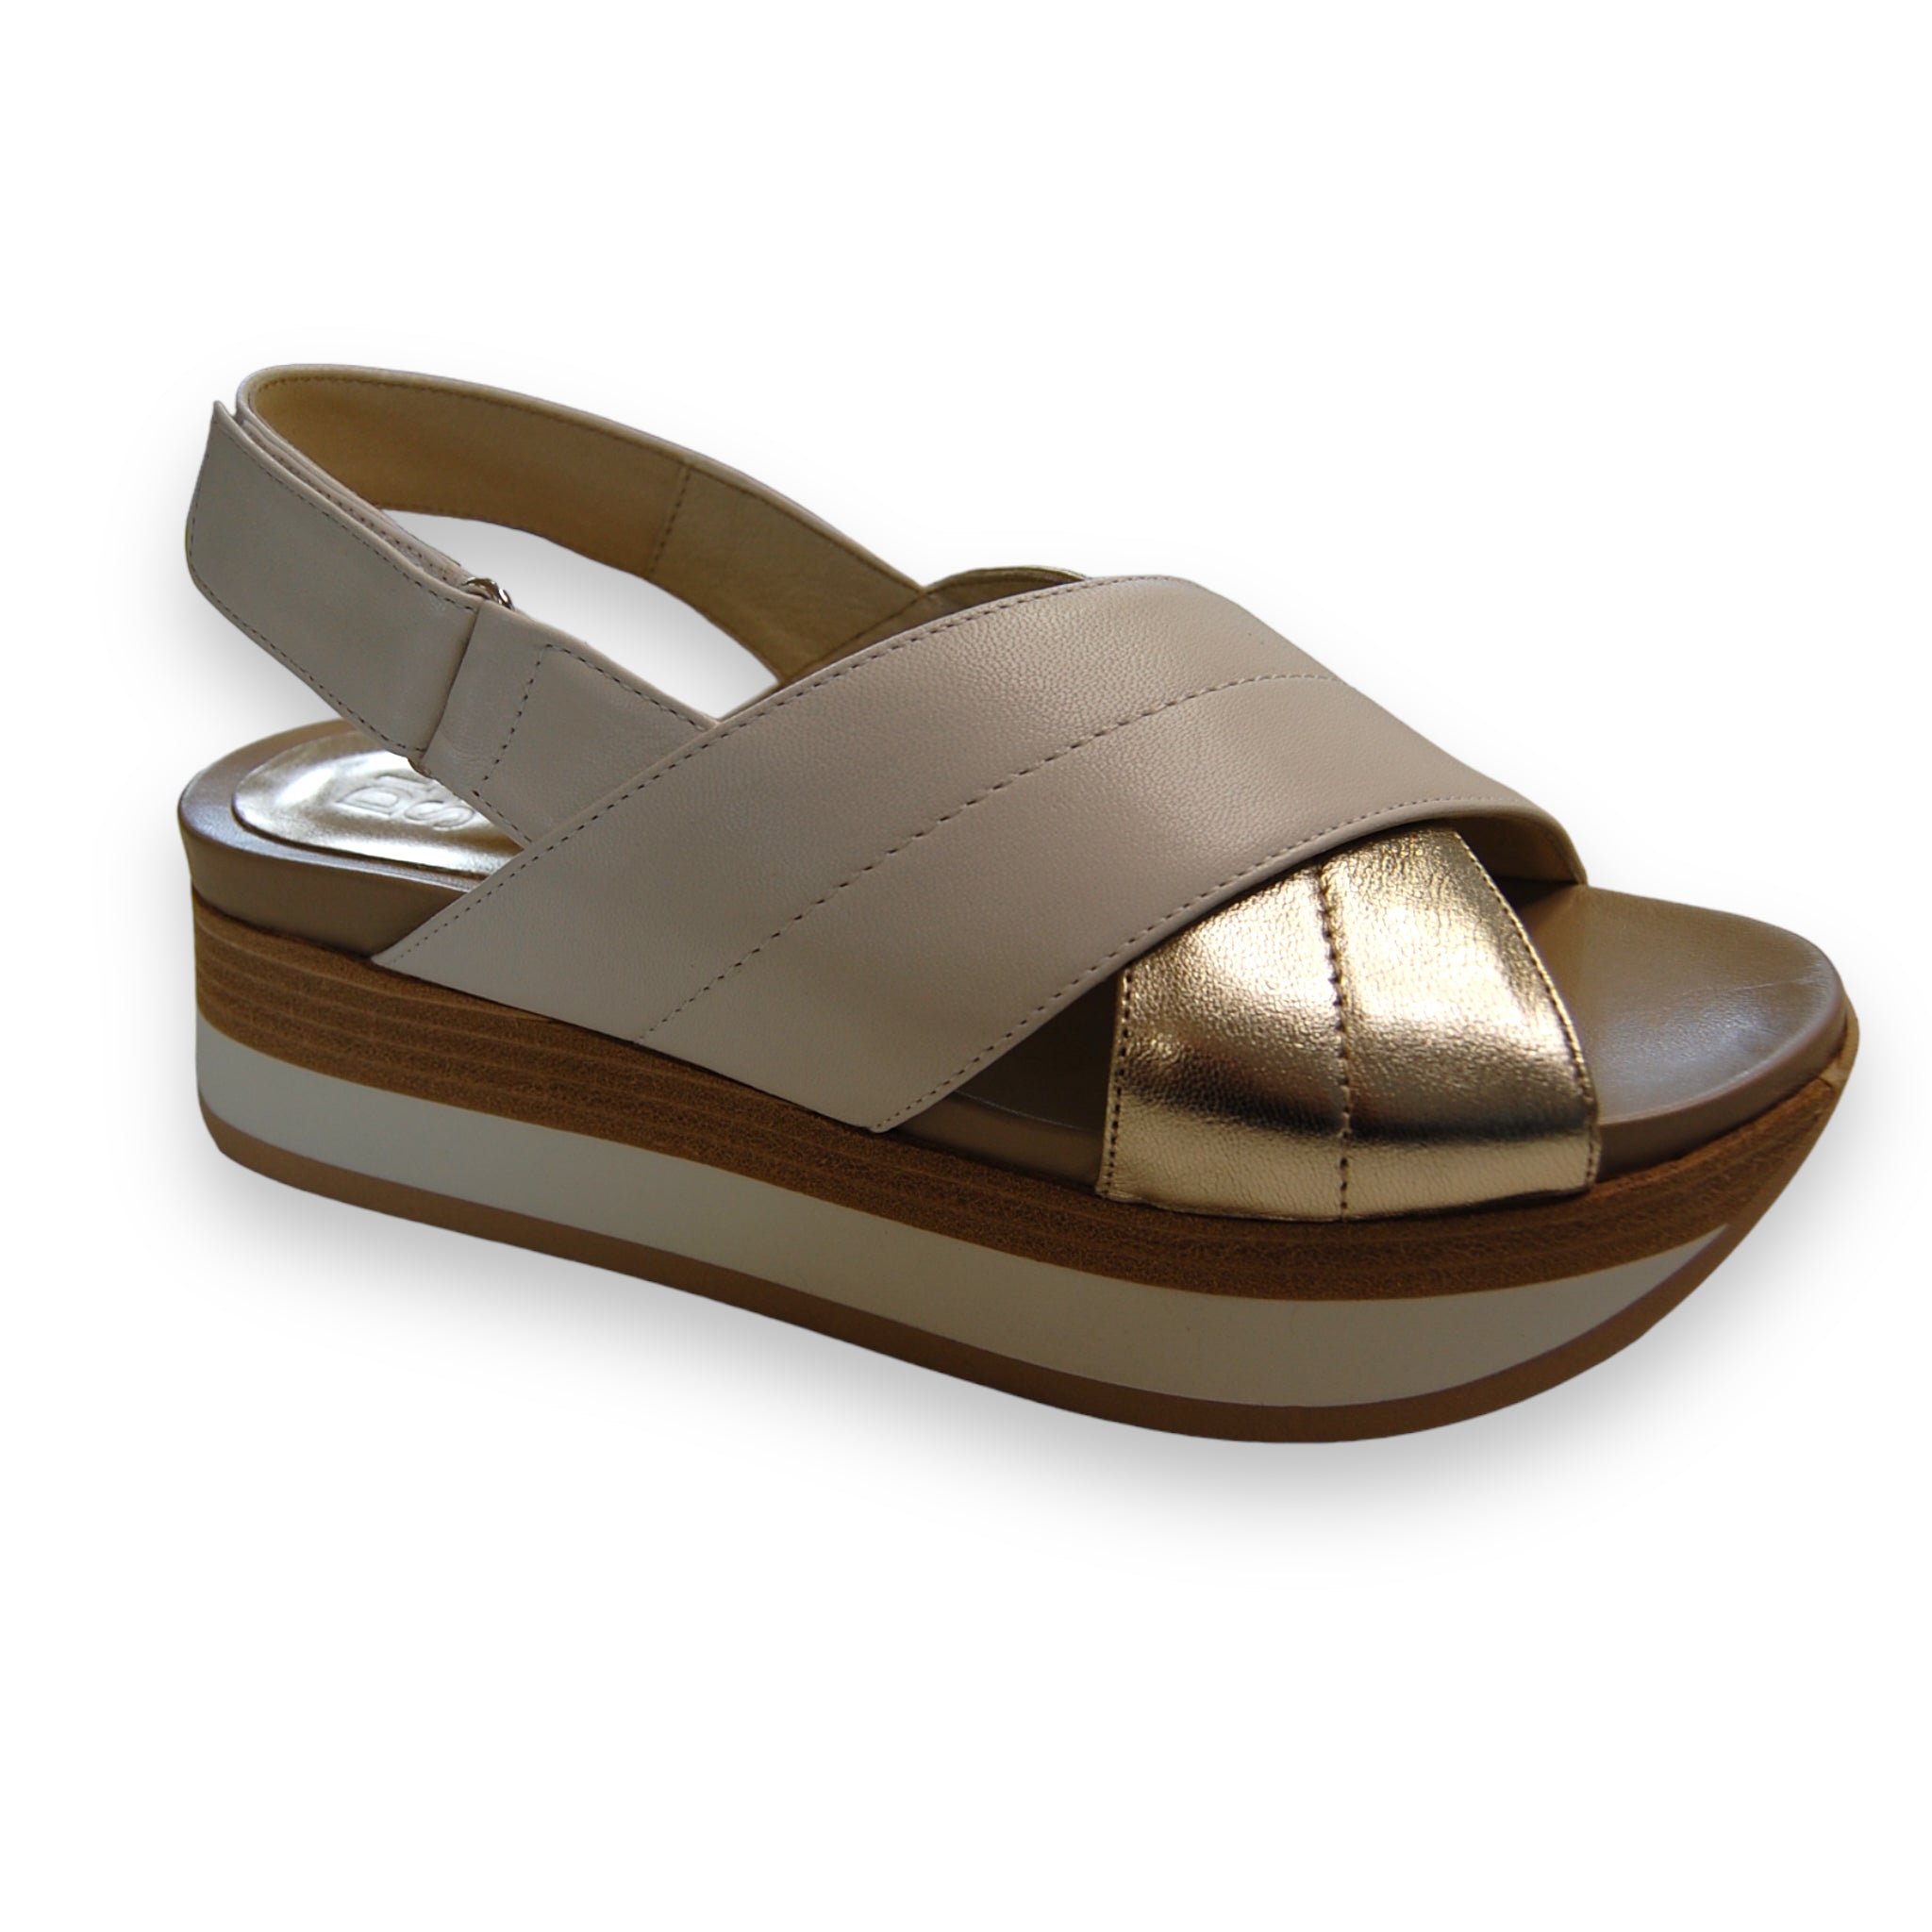 DL-Sport-Platform-Sandals-Cream-Gold-a